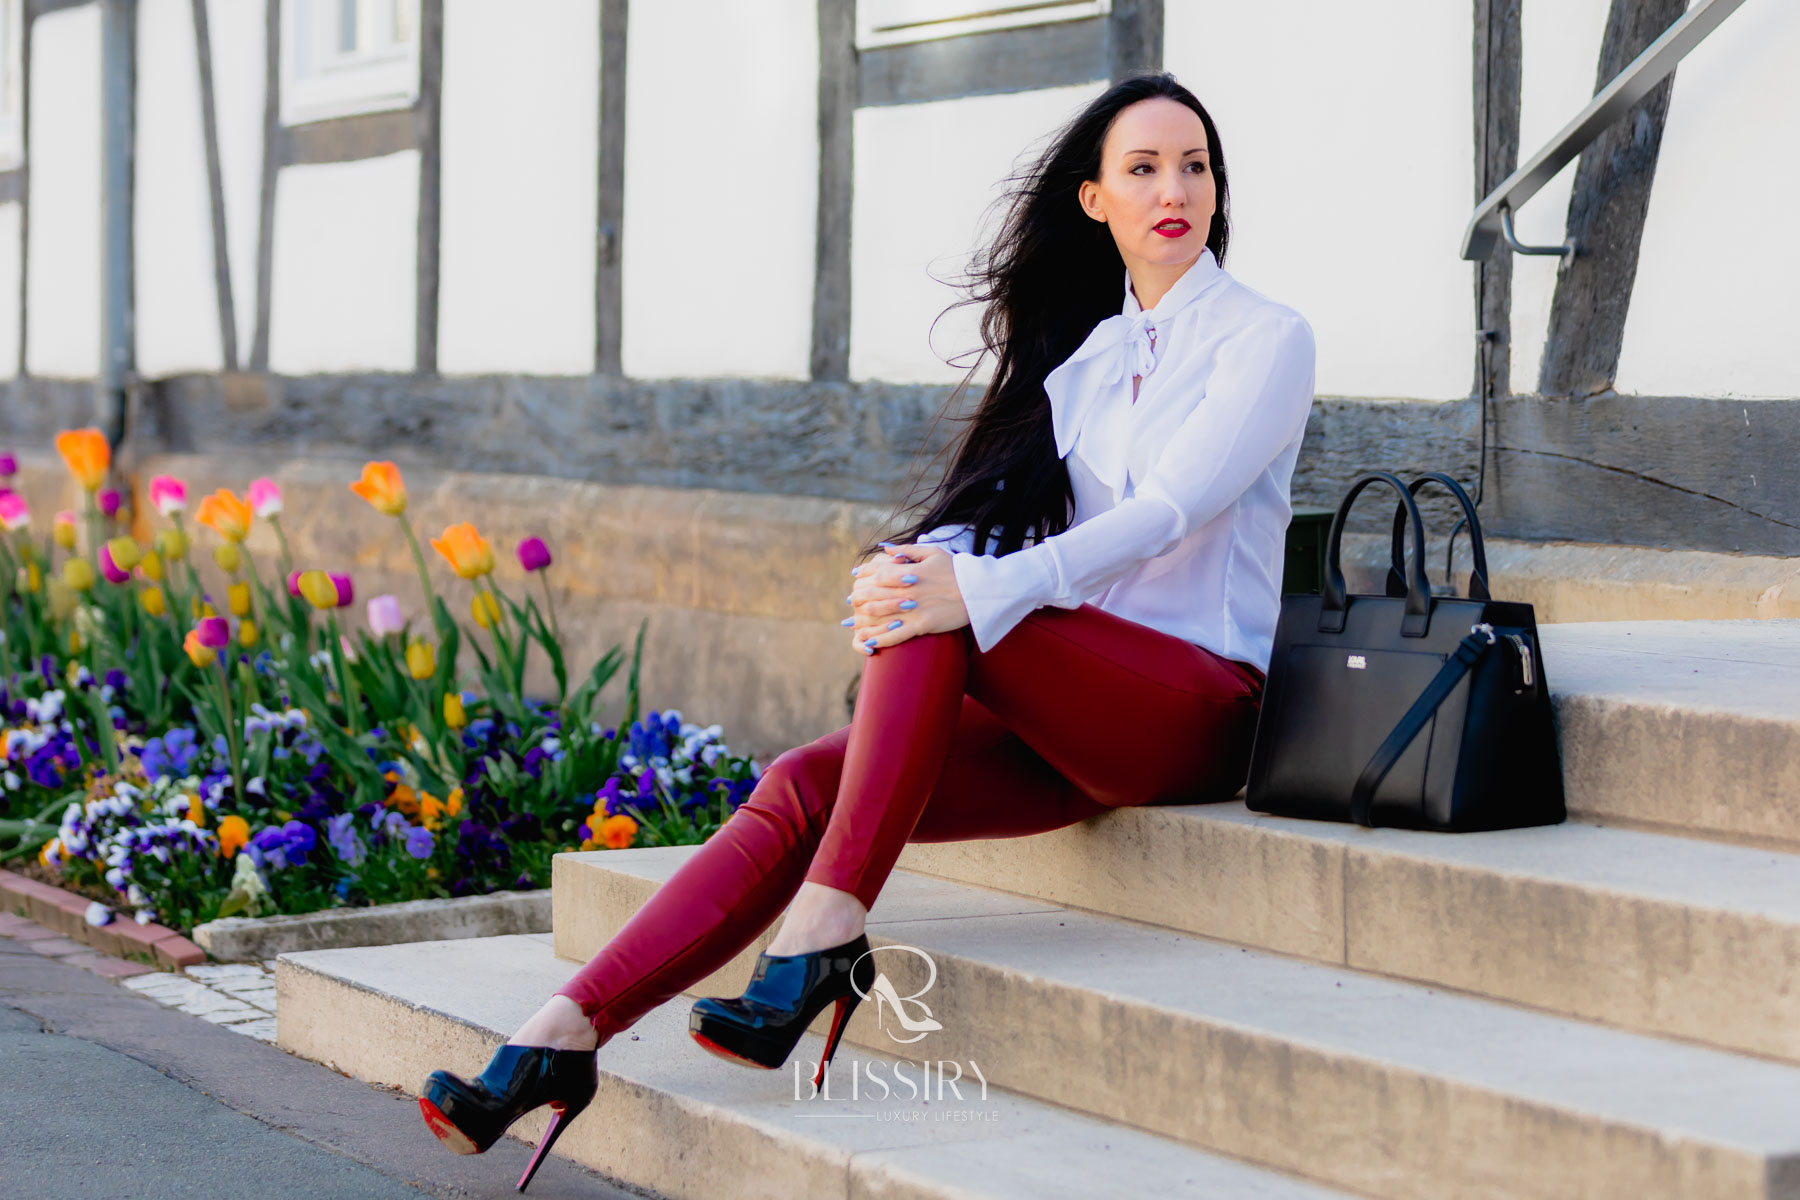 Fashionblog BLISSIRY - Luxusblog - Lederhose in rot, Plateau Pumps von Christian Louboutin, weiße Bluse - Welche Lederhose sollte man kaufen - welche Looks passen zu Lederhose